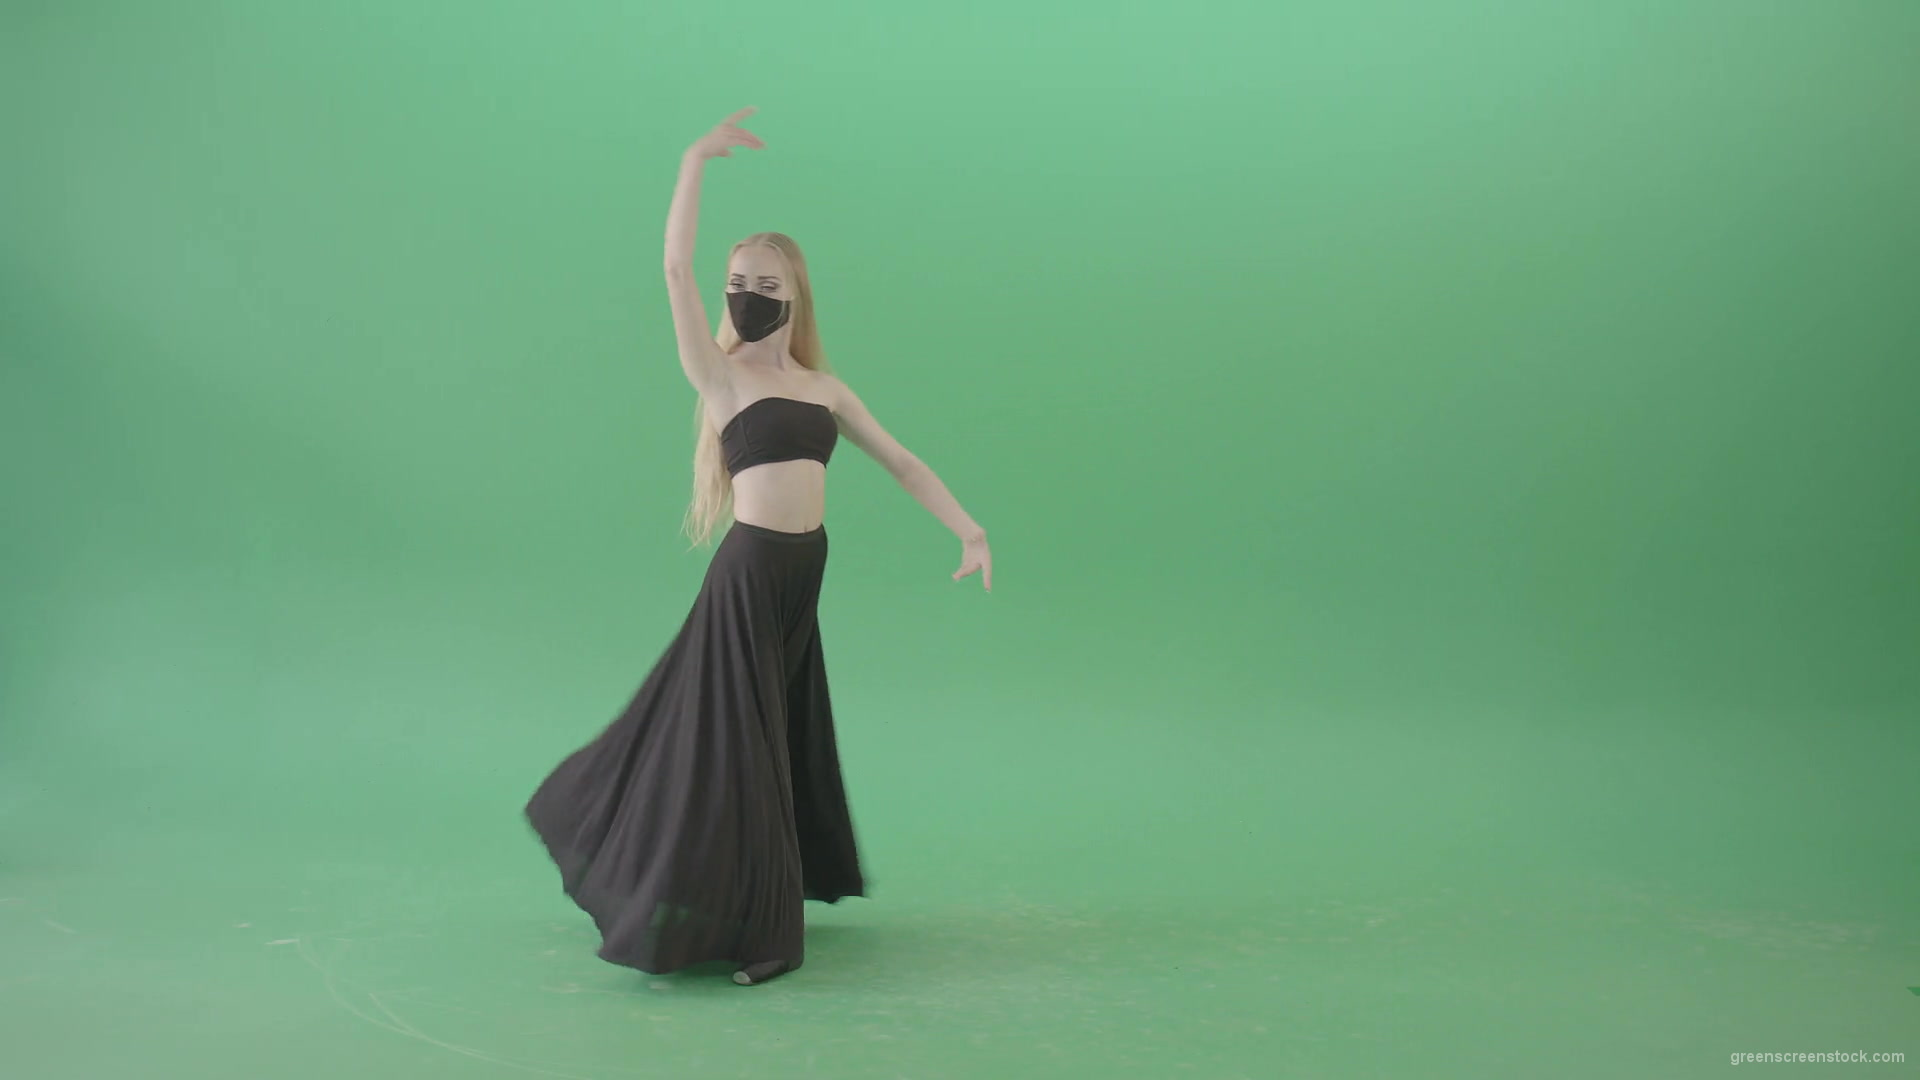 Blonde-Ballet-girl-in-black-dress-and-mask-dancing-Corona-Virus-flamenco-on-green-screen-4K-Video-Footage-1920_005 Green Screen Stock